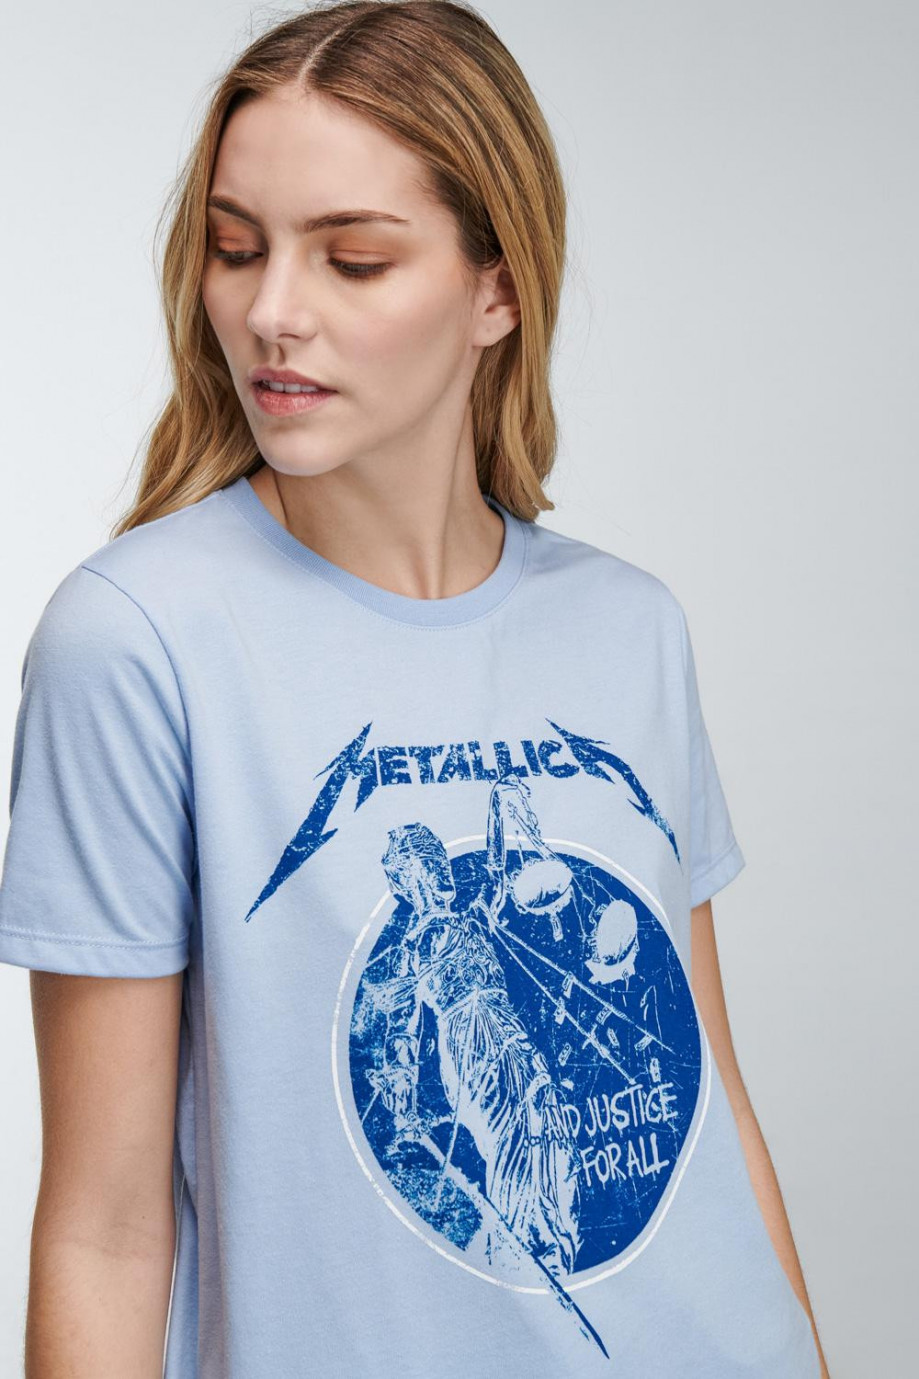 Camiseta manga corta, estampada de Metallica